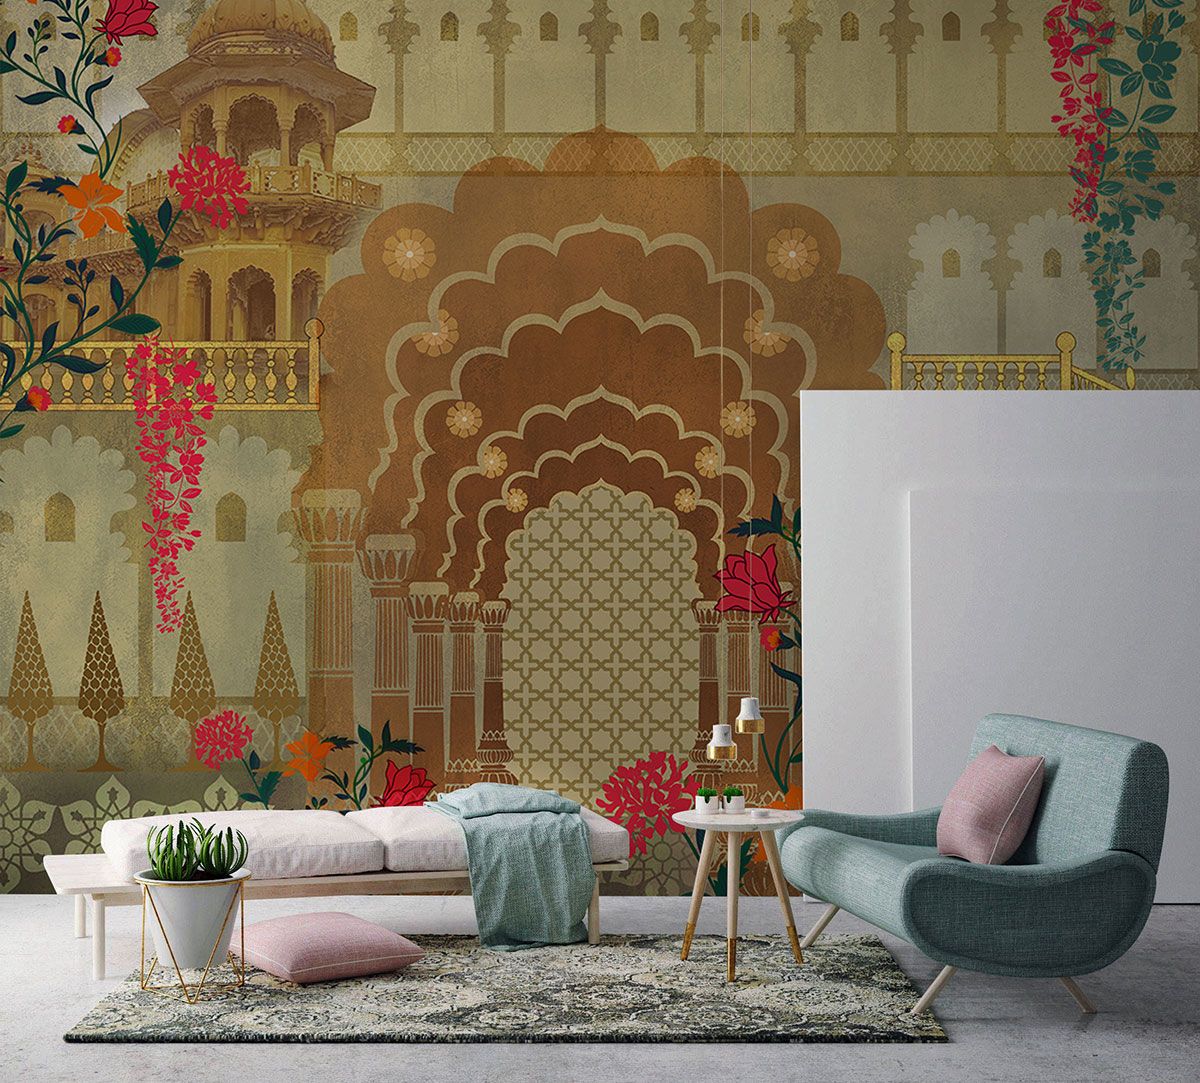 wallpaper designs for living room india,living room,wallpaper,room,furniture,interior design